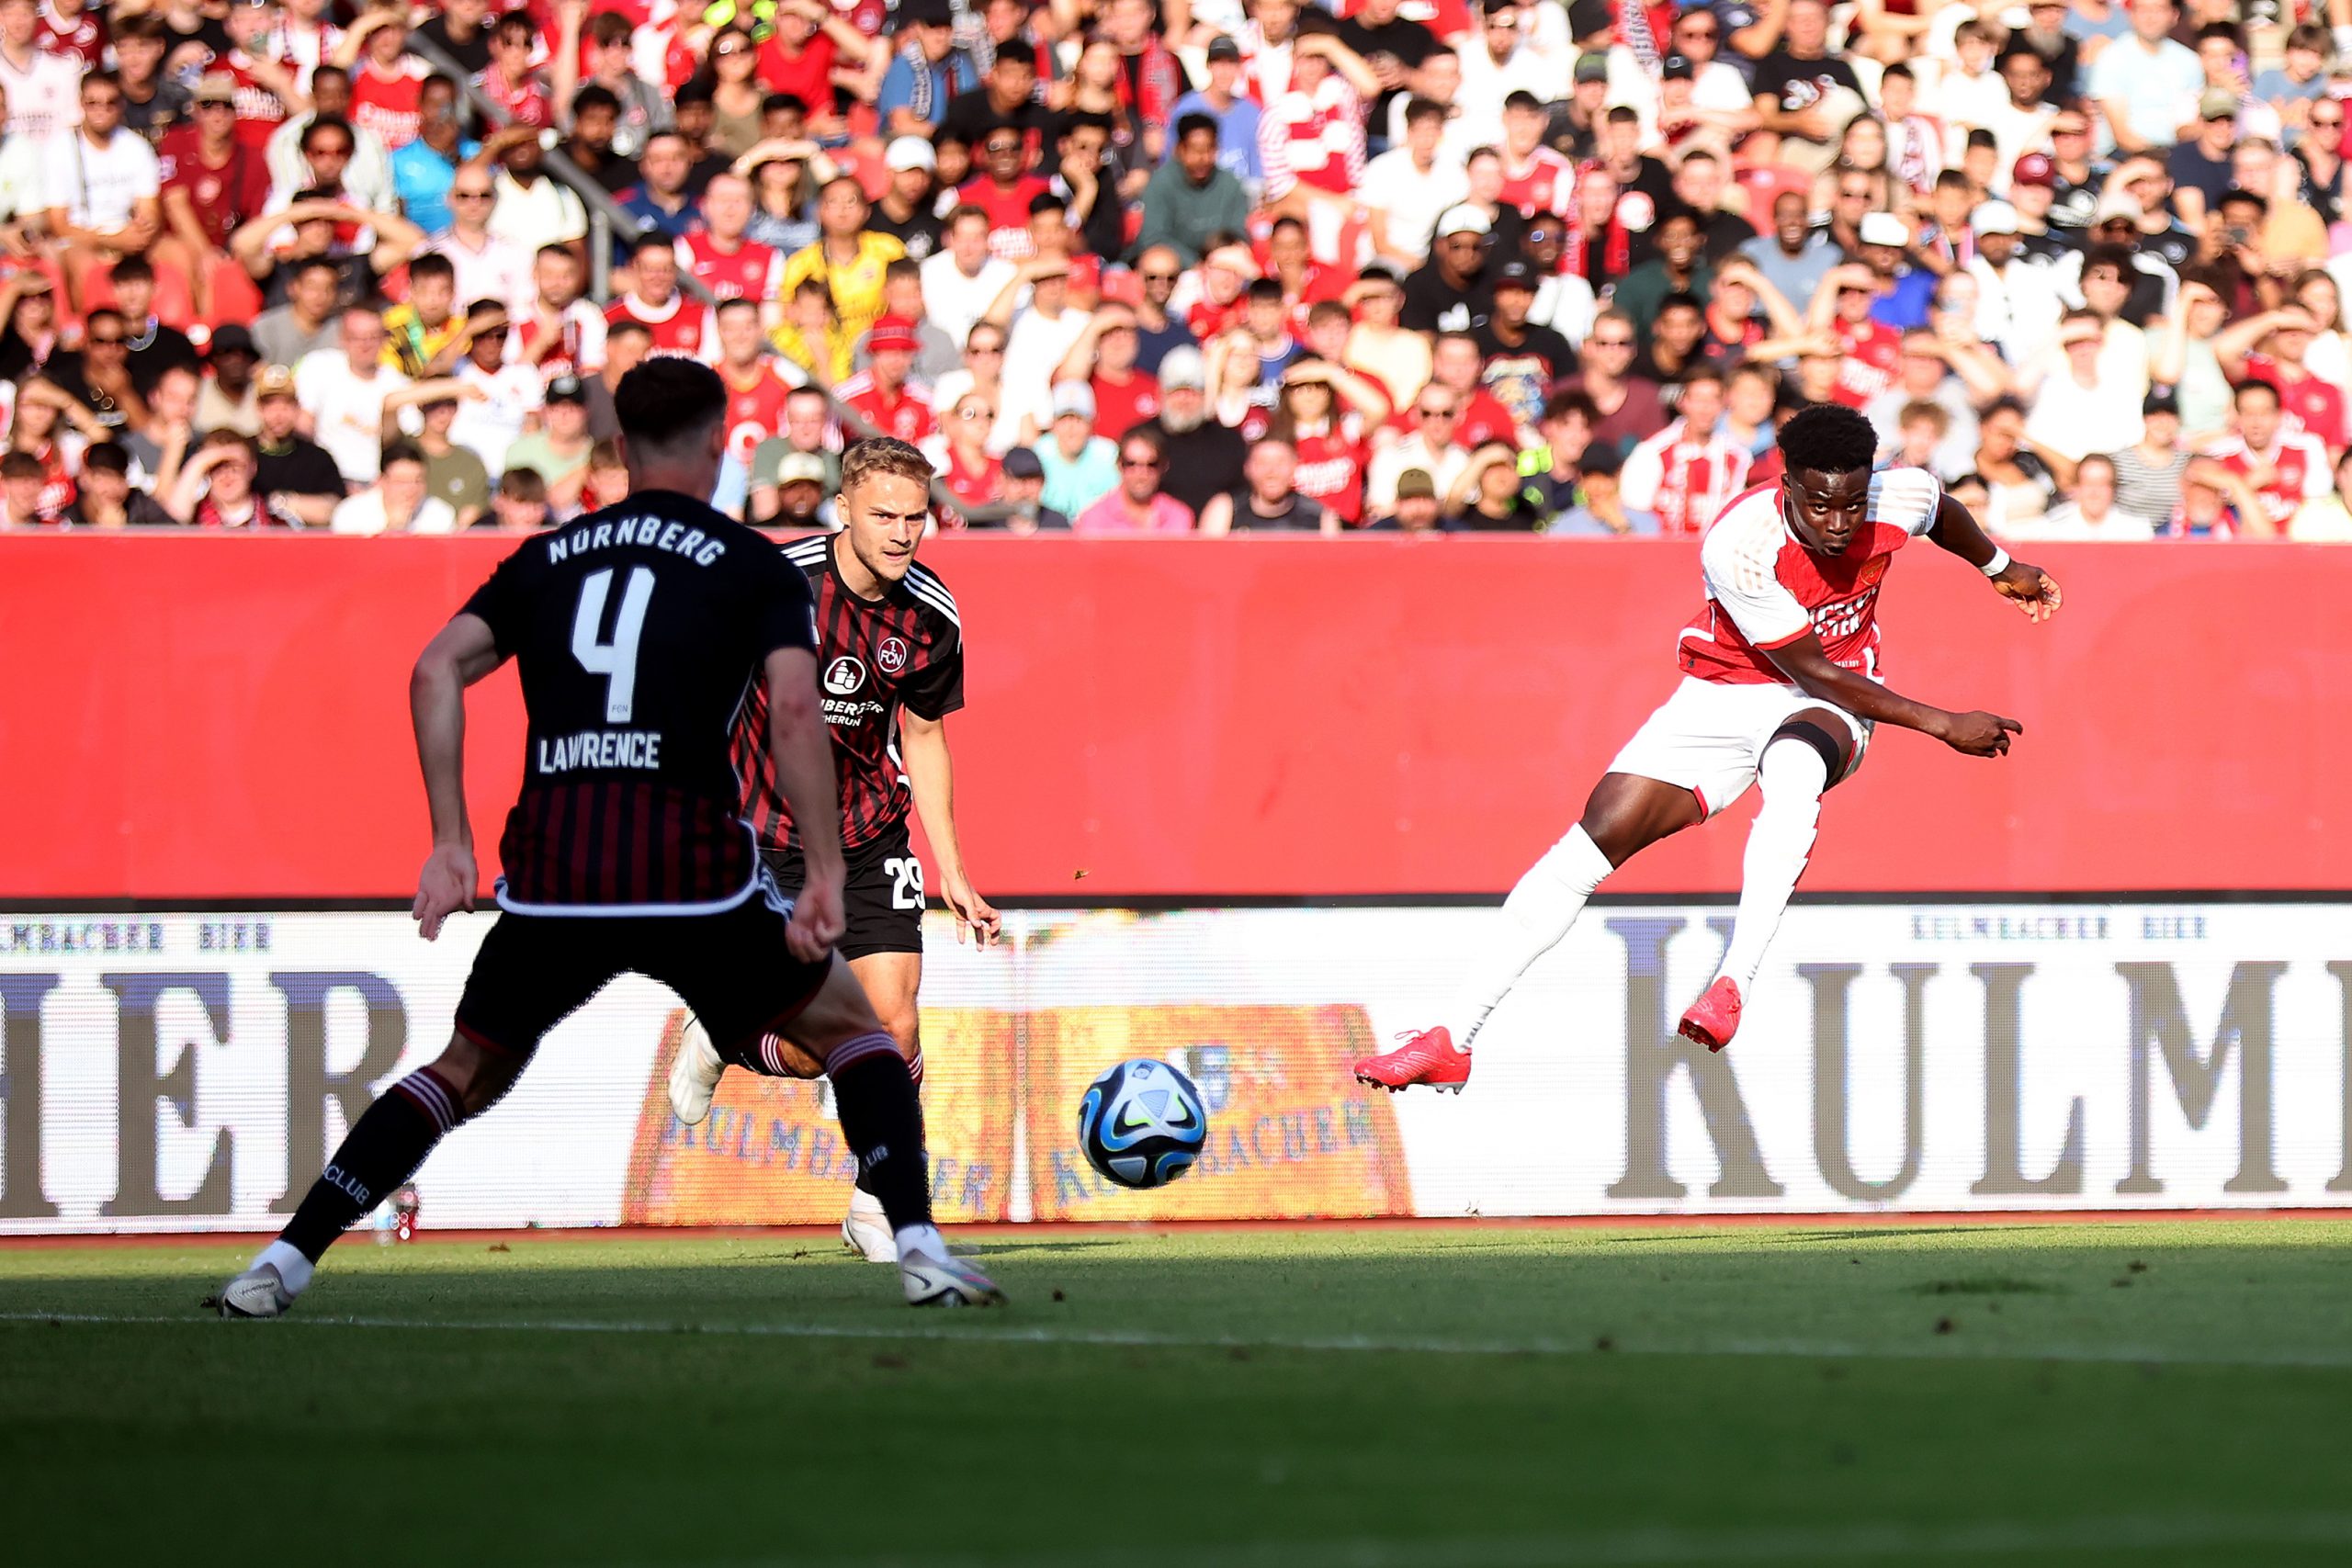 Nurnberg 1 Arsenal 1: Saka picks up where he left off but Gunners held in Germany after horror own goal